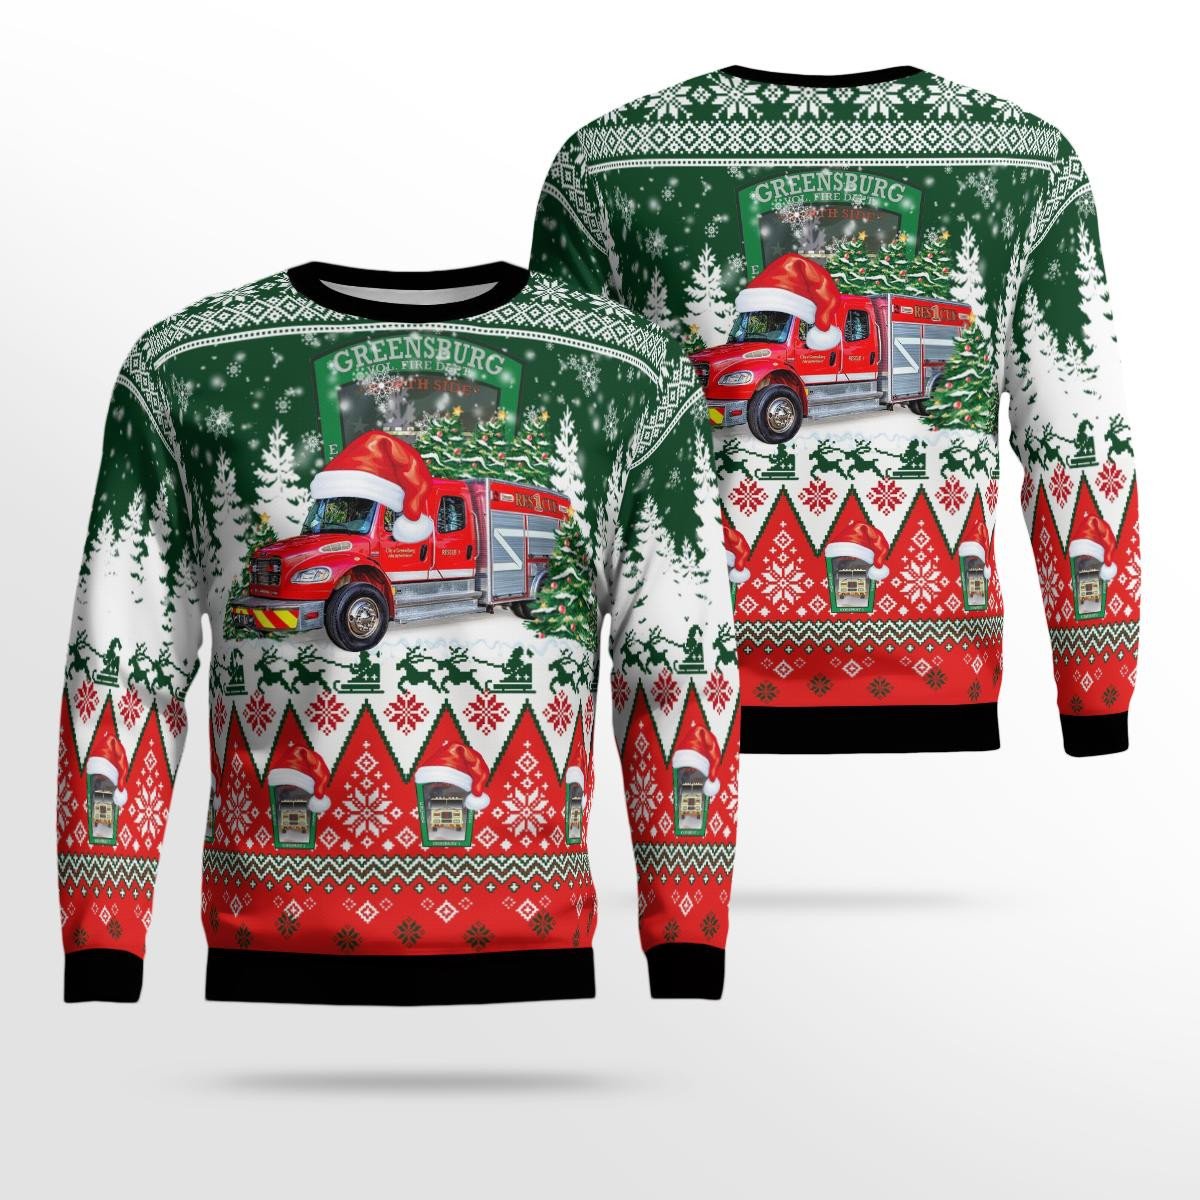 Greensburg Hose Co. 1 Christmas All Over Print Ugly Sweater/ Perfect Shirt for Christmas